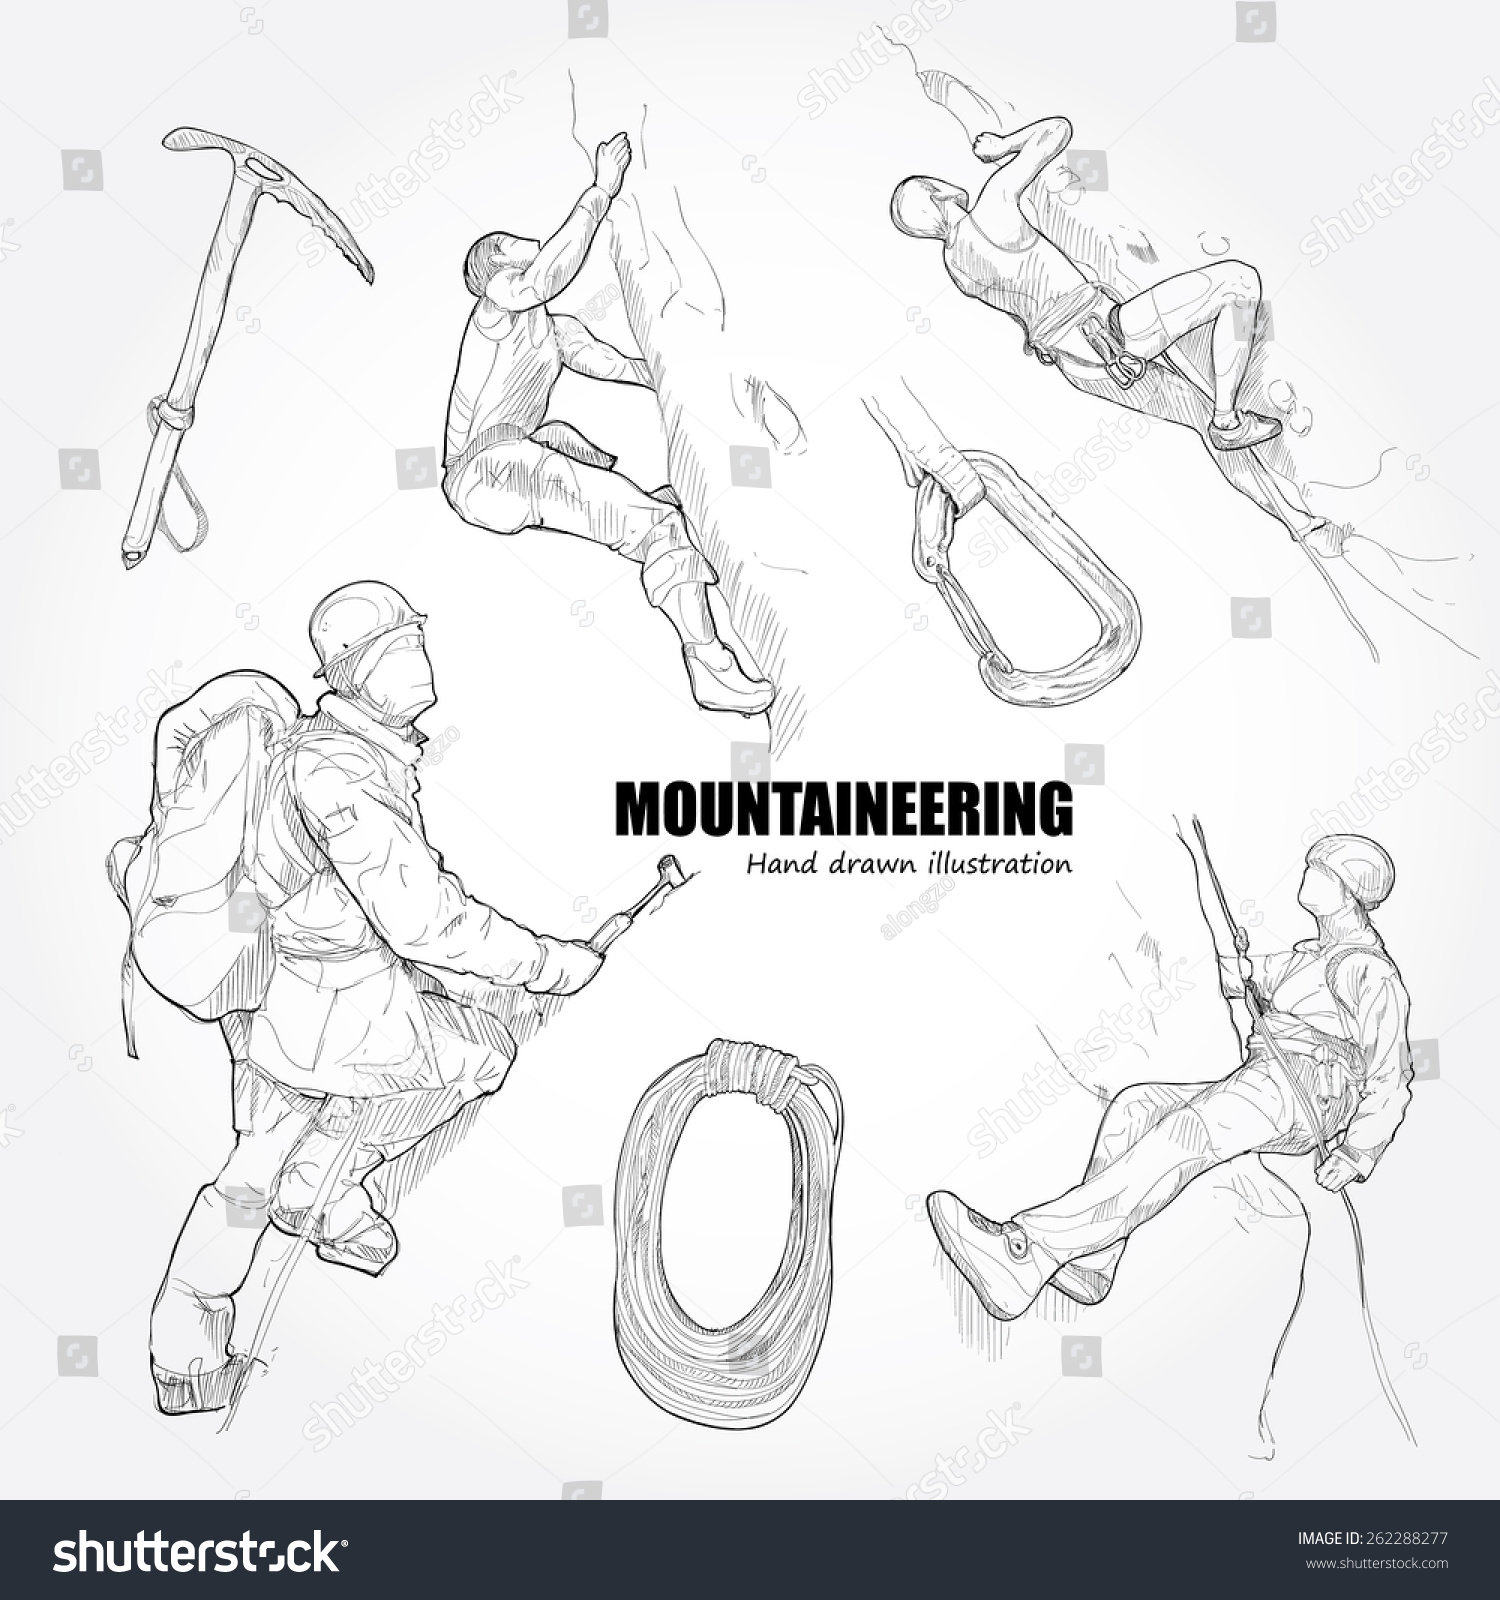 Illustration Of Mountaineering. Hand Drawn. 262288277 Shutterstock